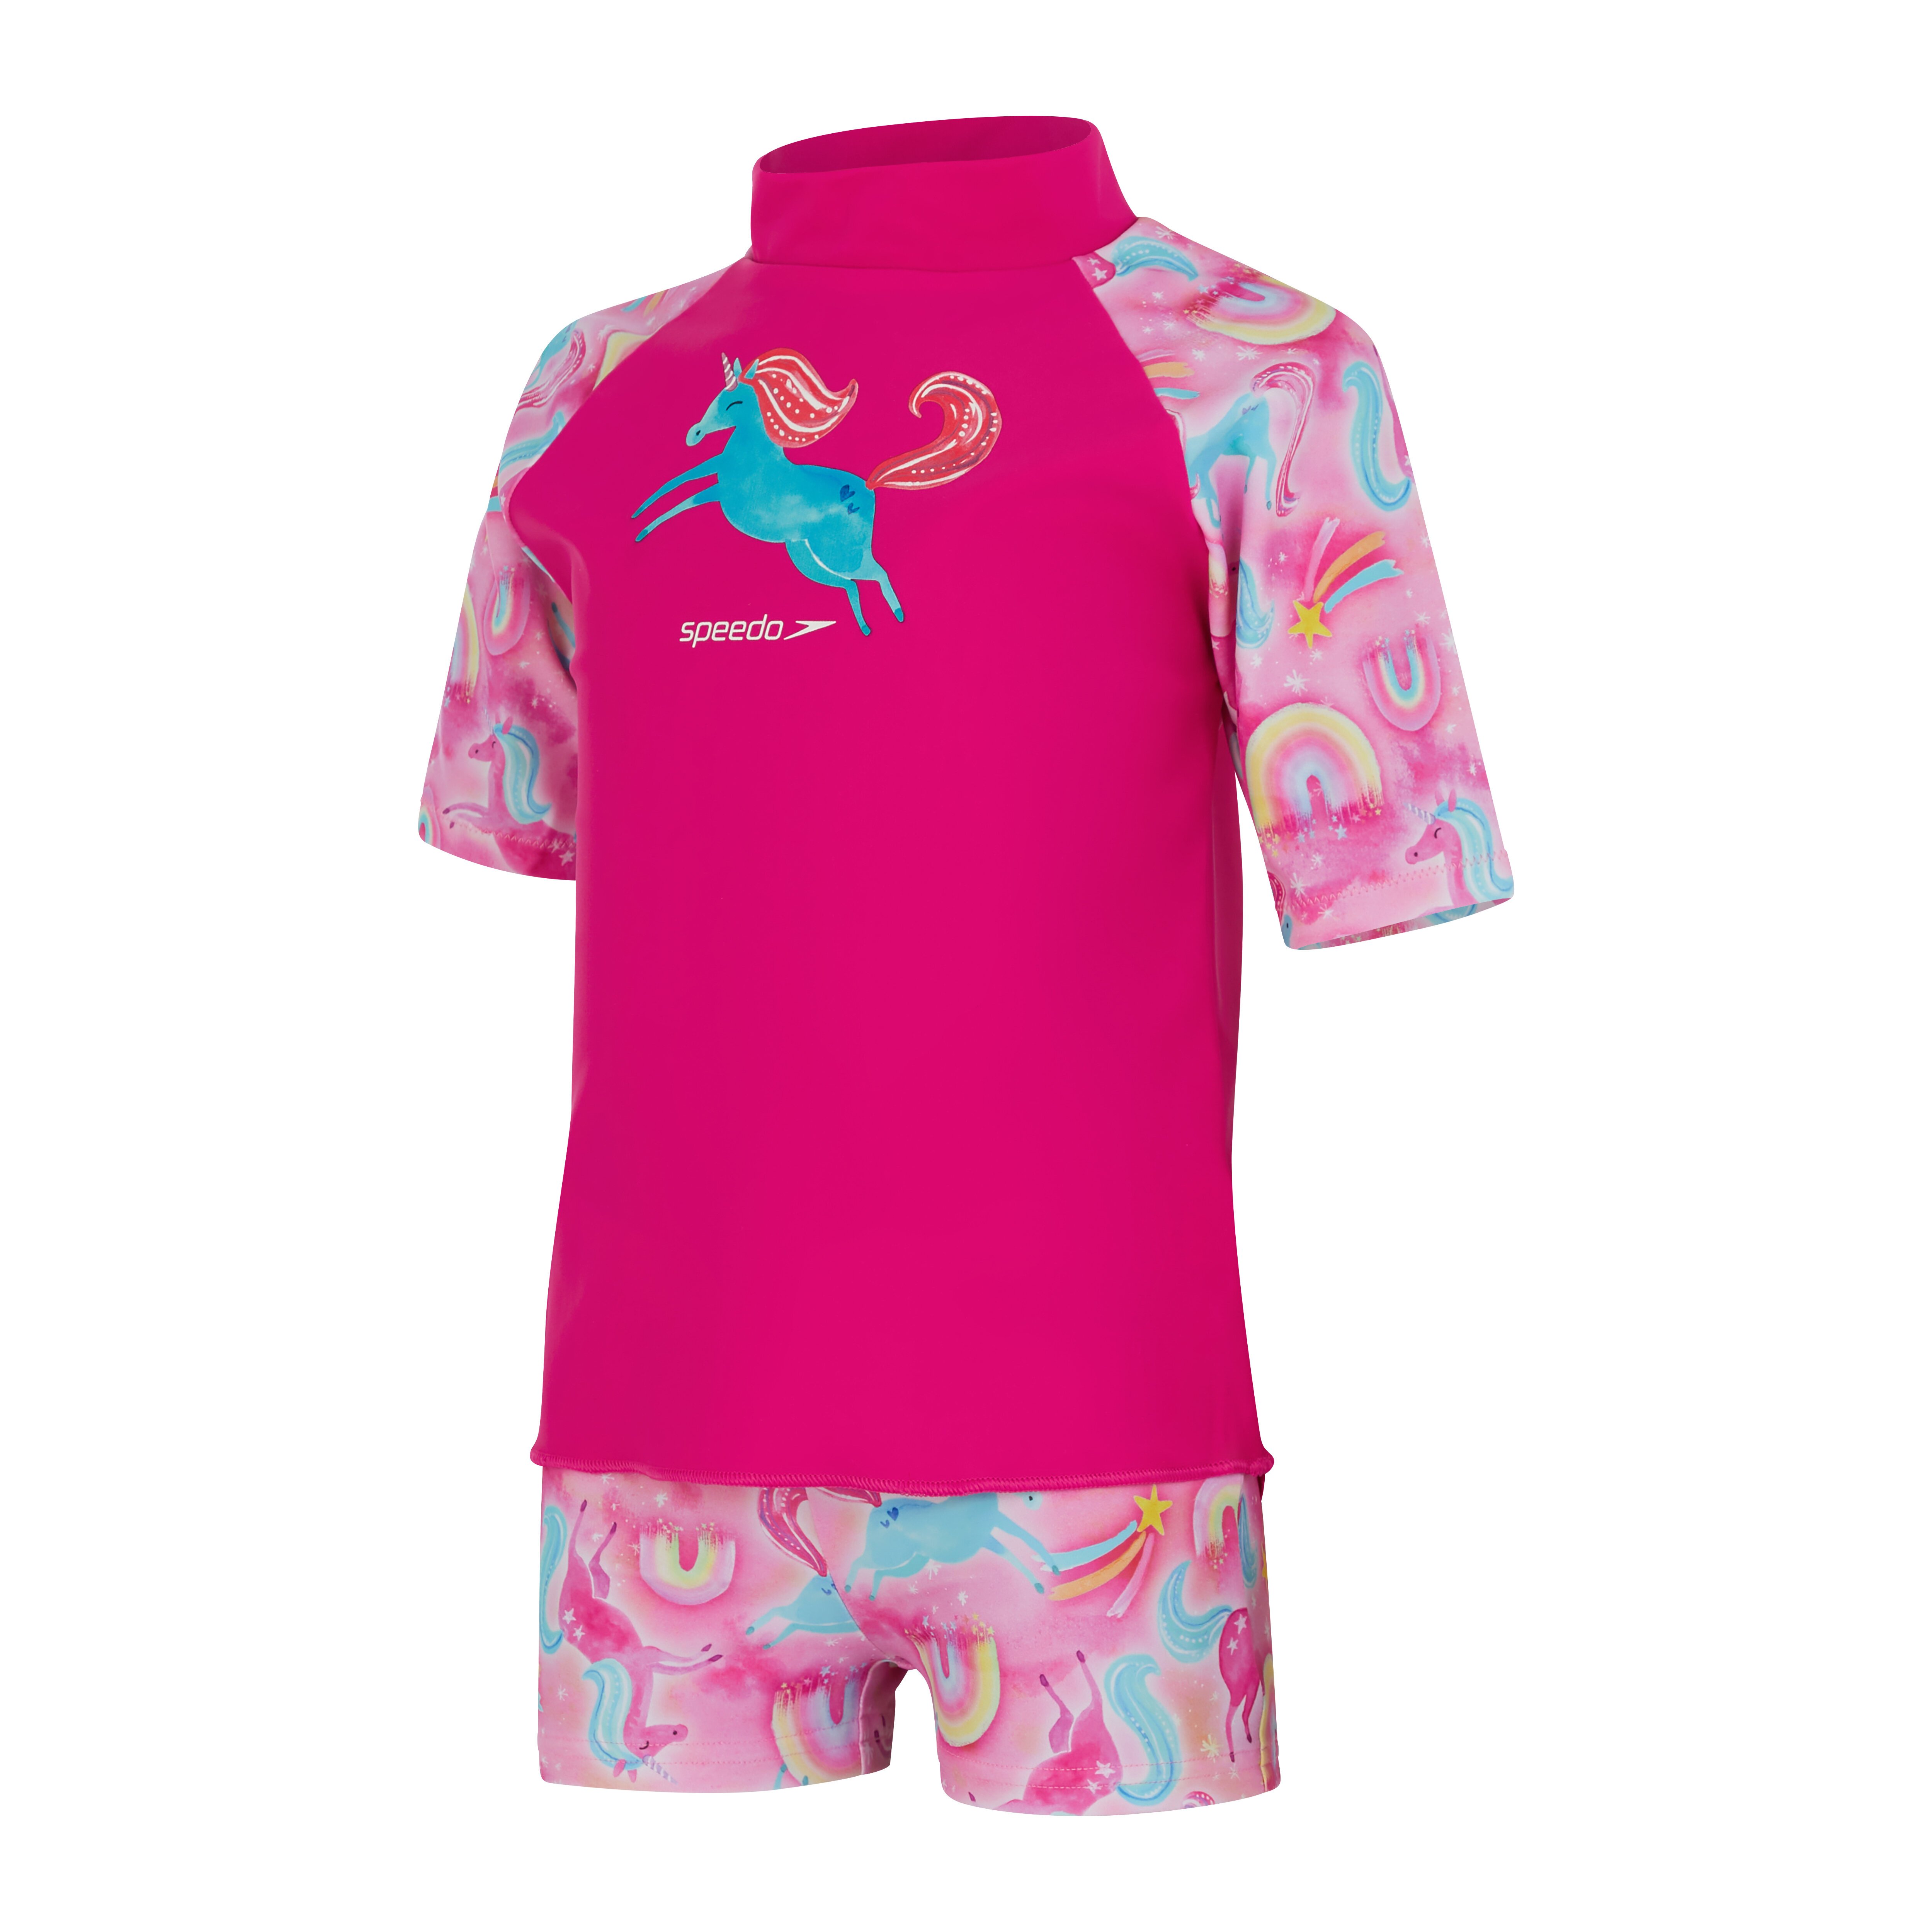 Speedo Short Sleeve Rash Set - Girls Swimwear | Kids Clothes | Top Kids ...